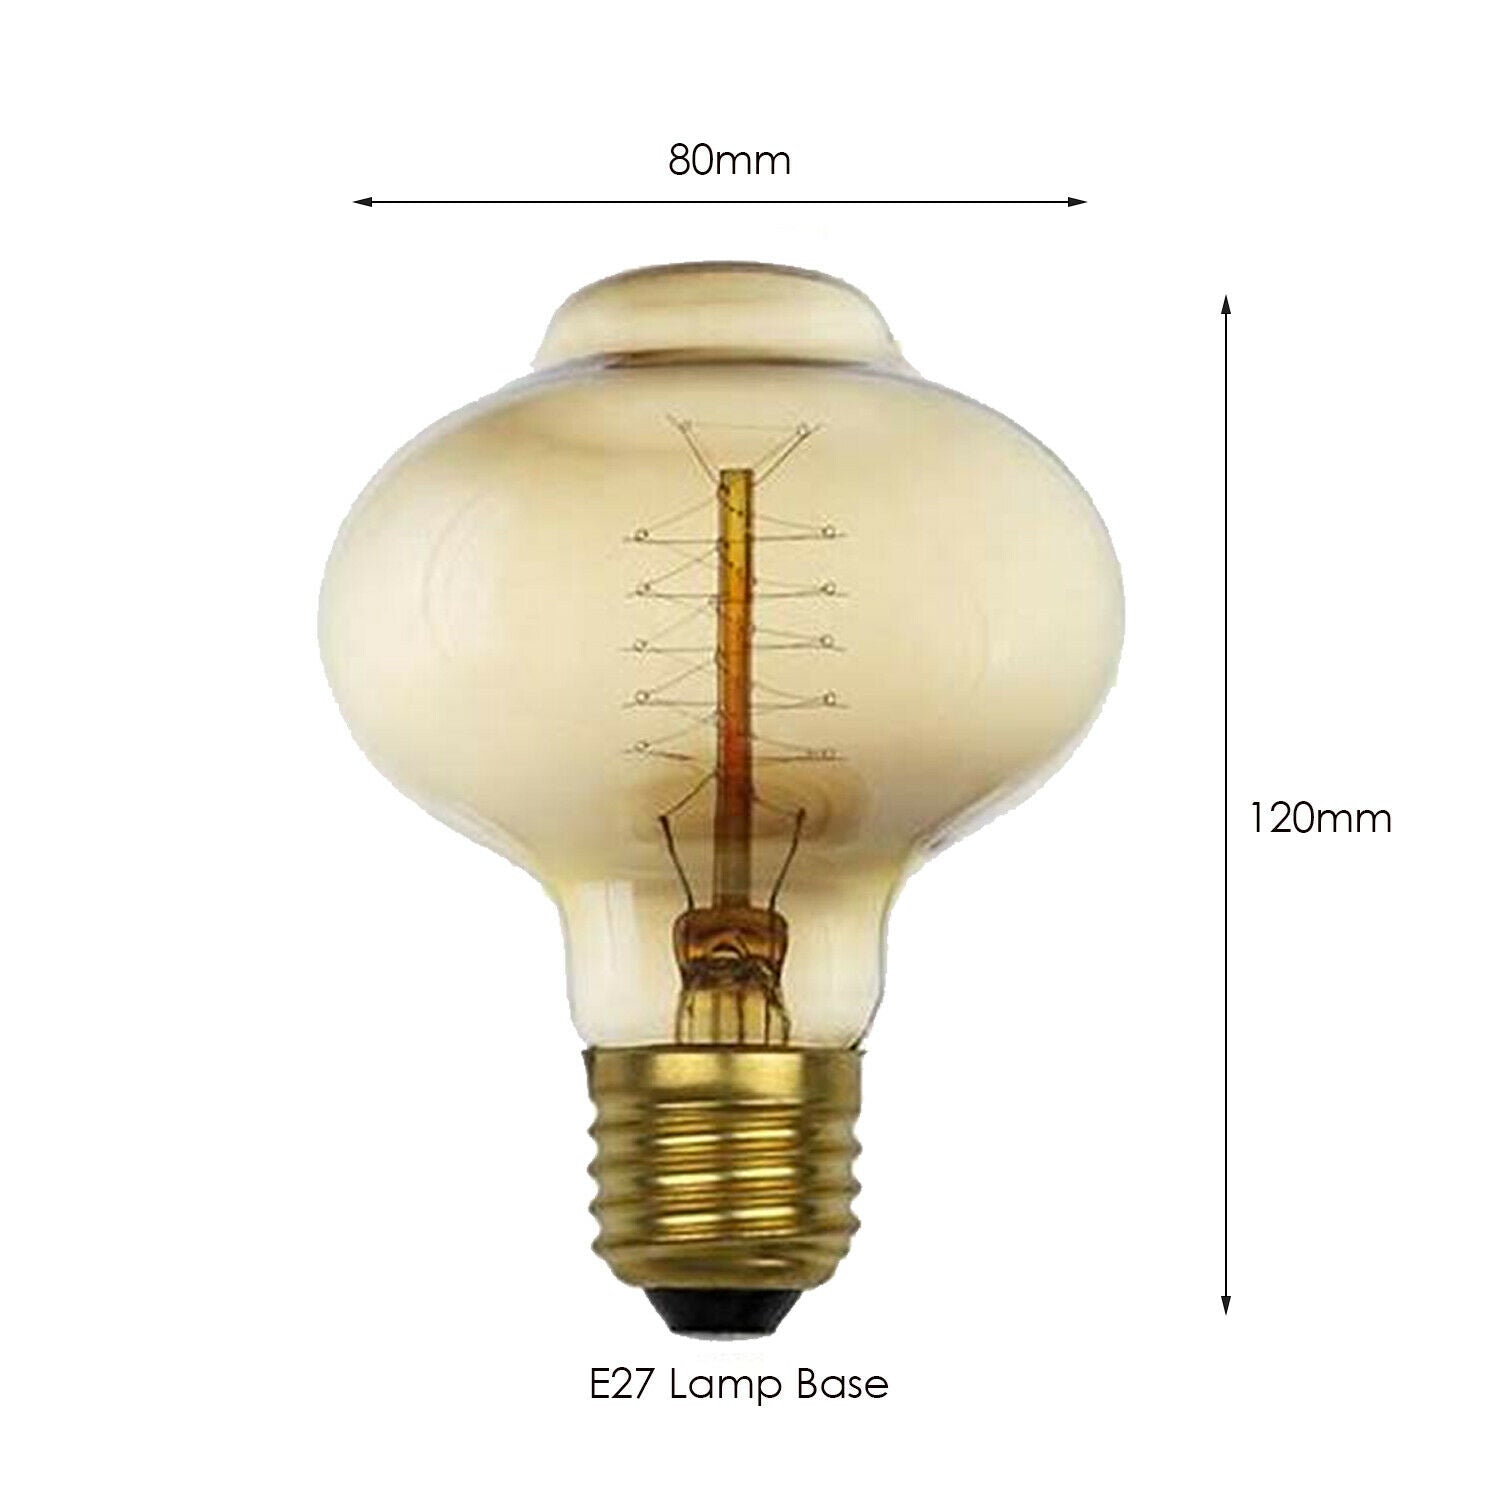 D80 E27 60W Mushroom Spiral Filament Lamp Light Bulb